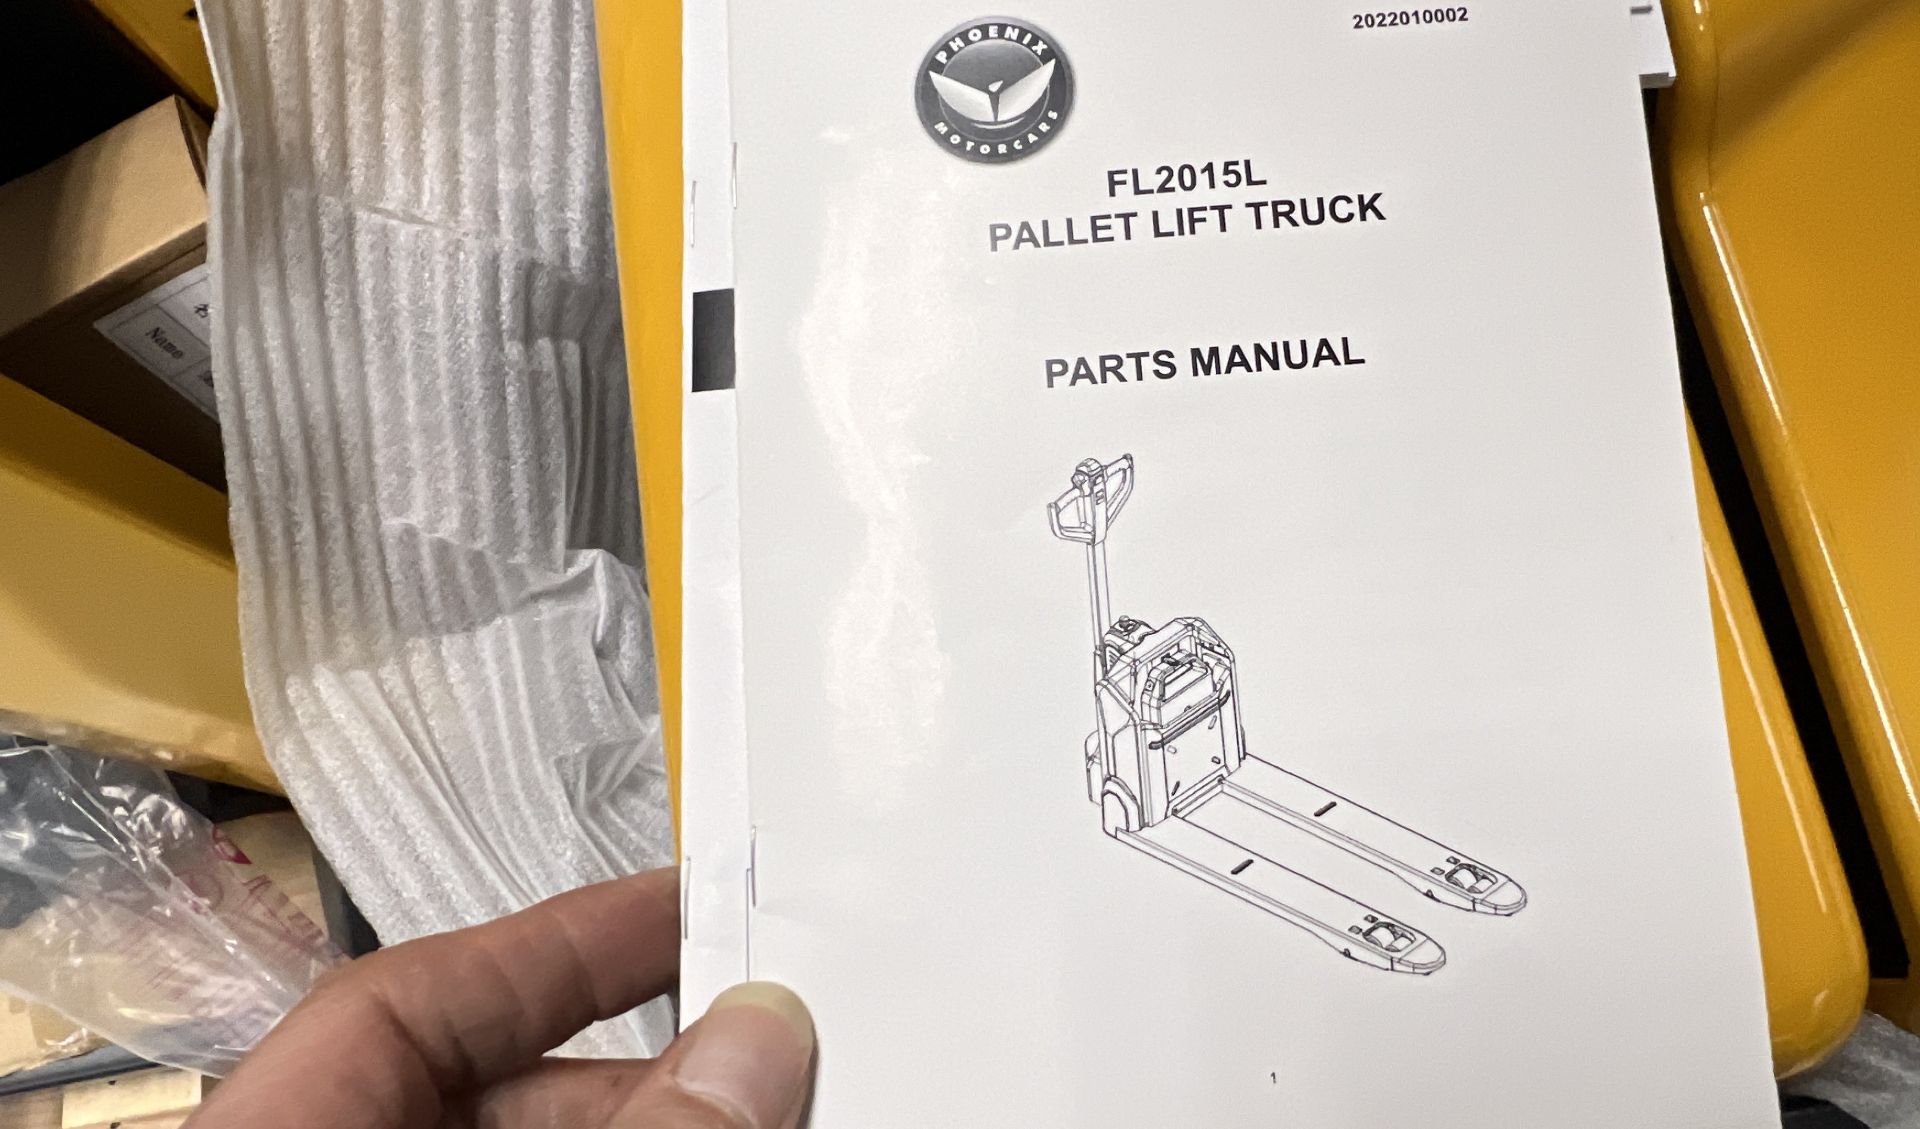 Electric Pallet Lift Truck